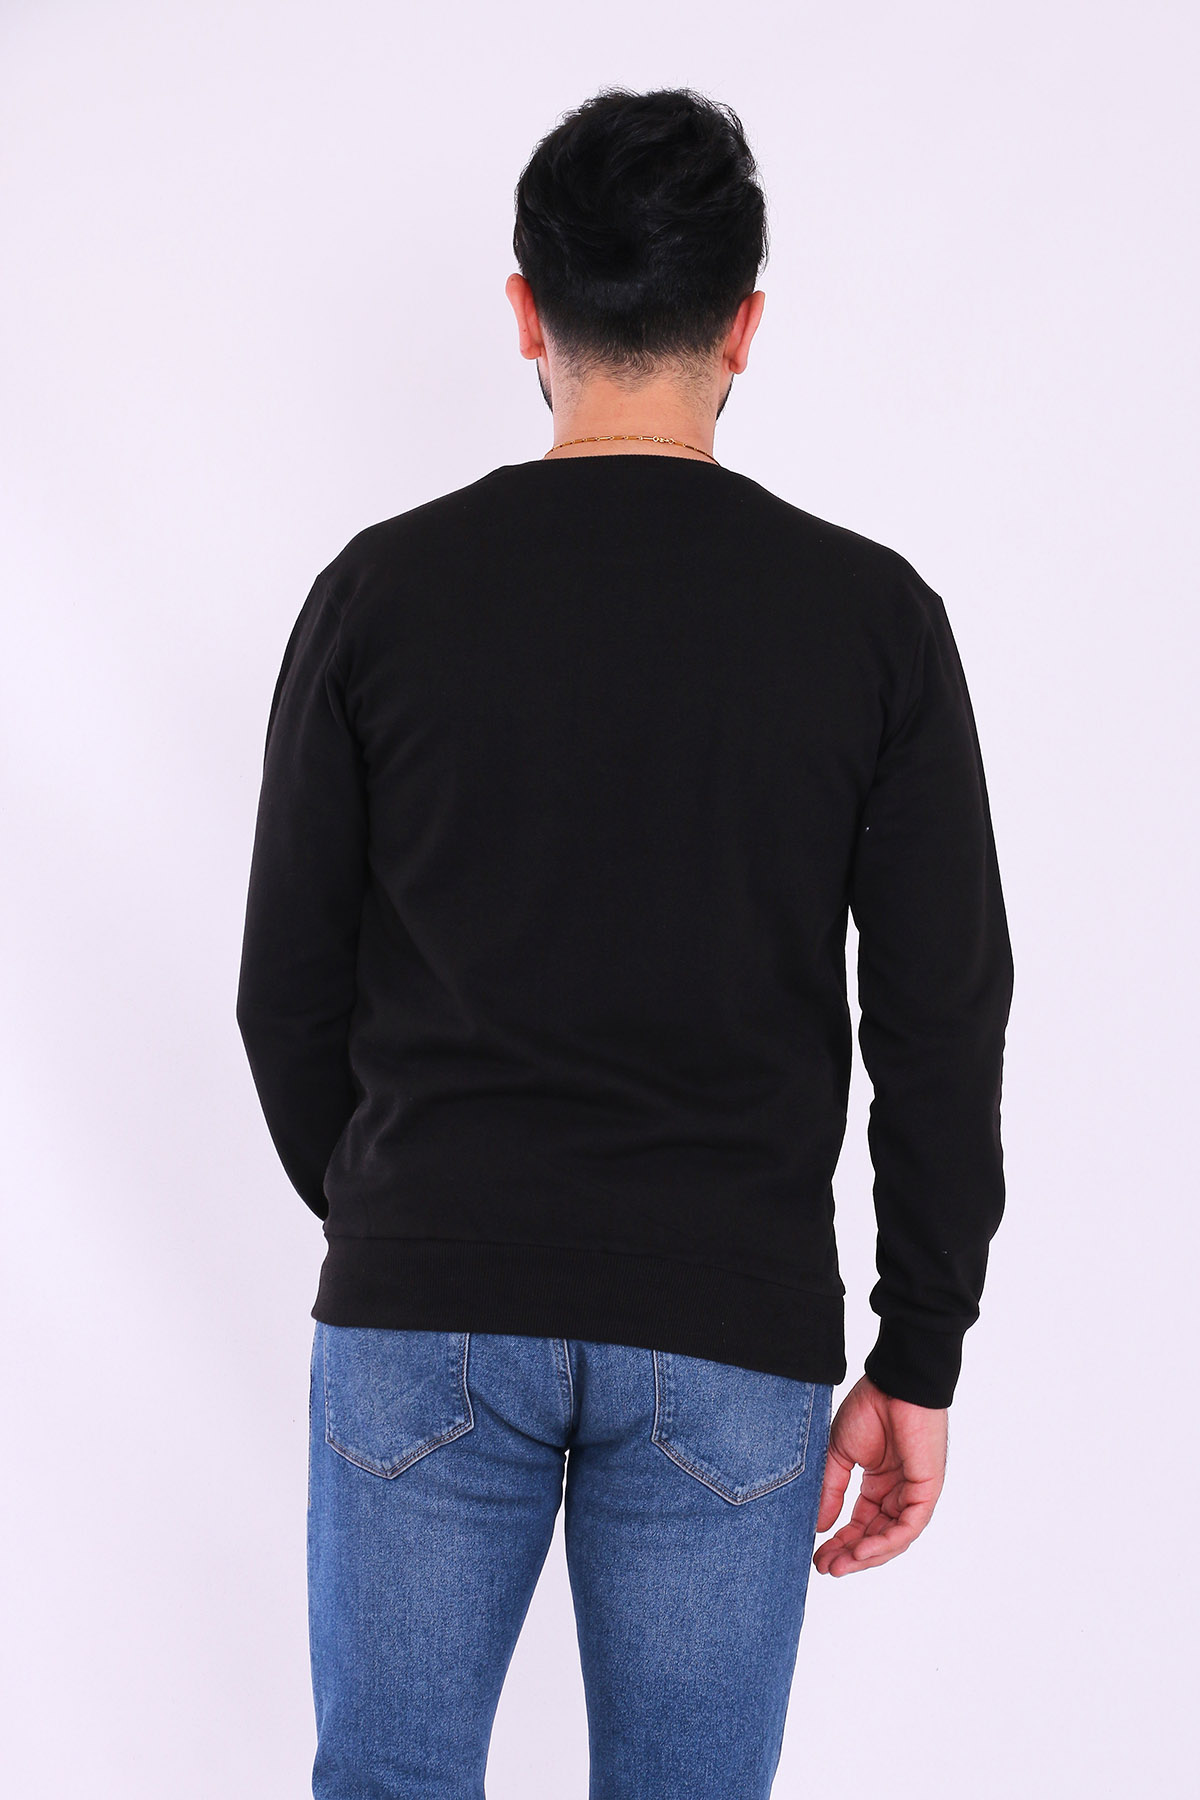 Siyah Basic Erkek 2 iplik Sweatshirt